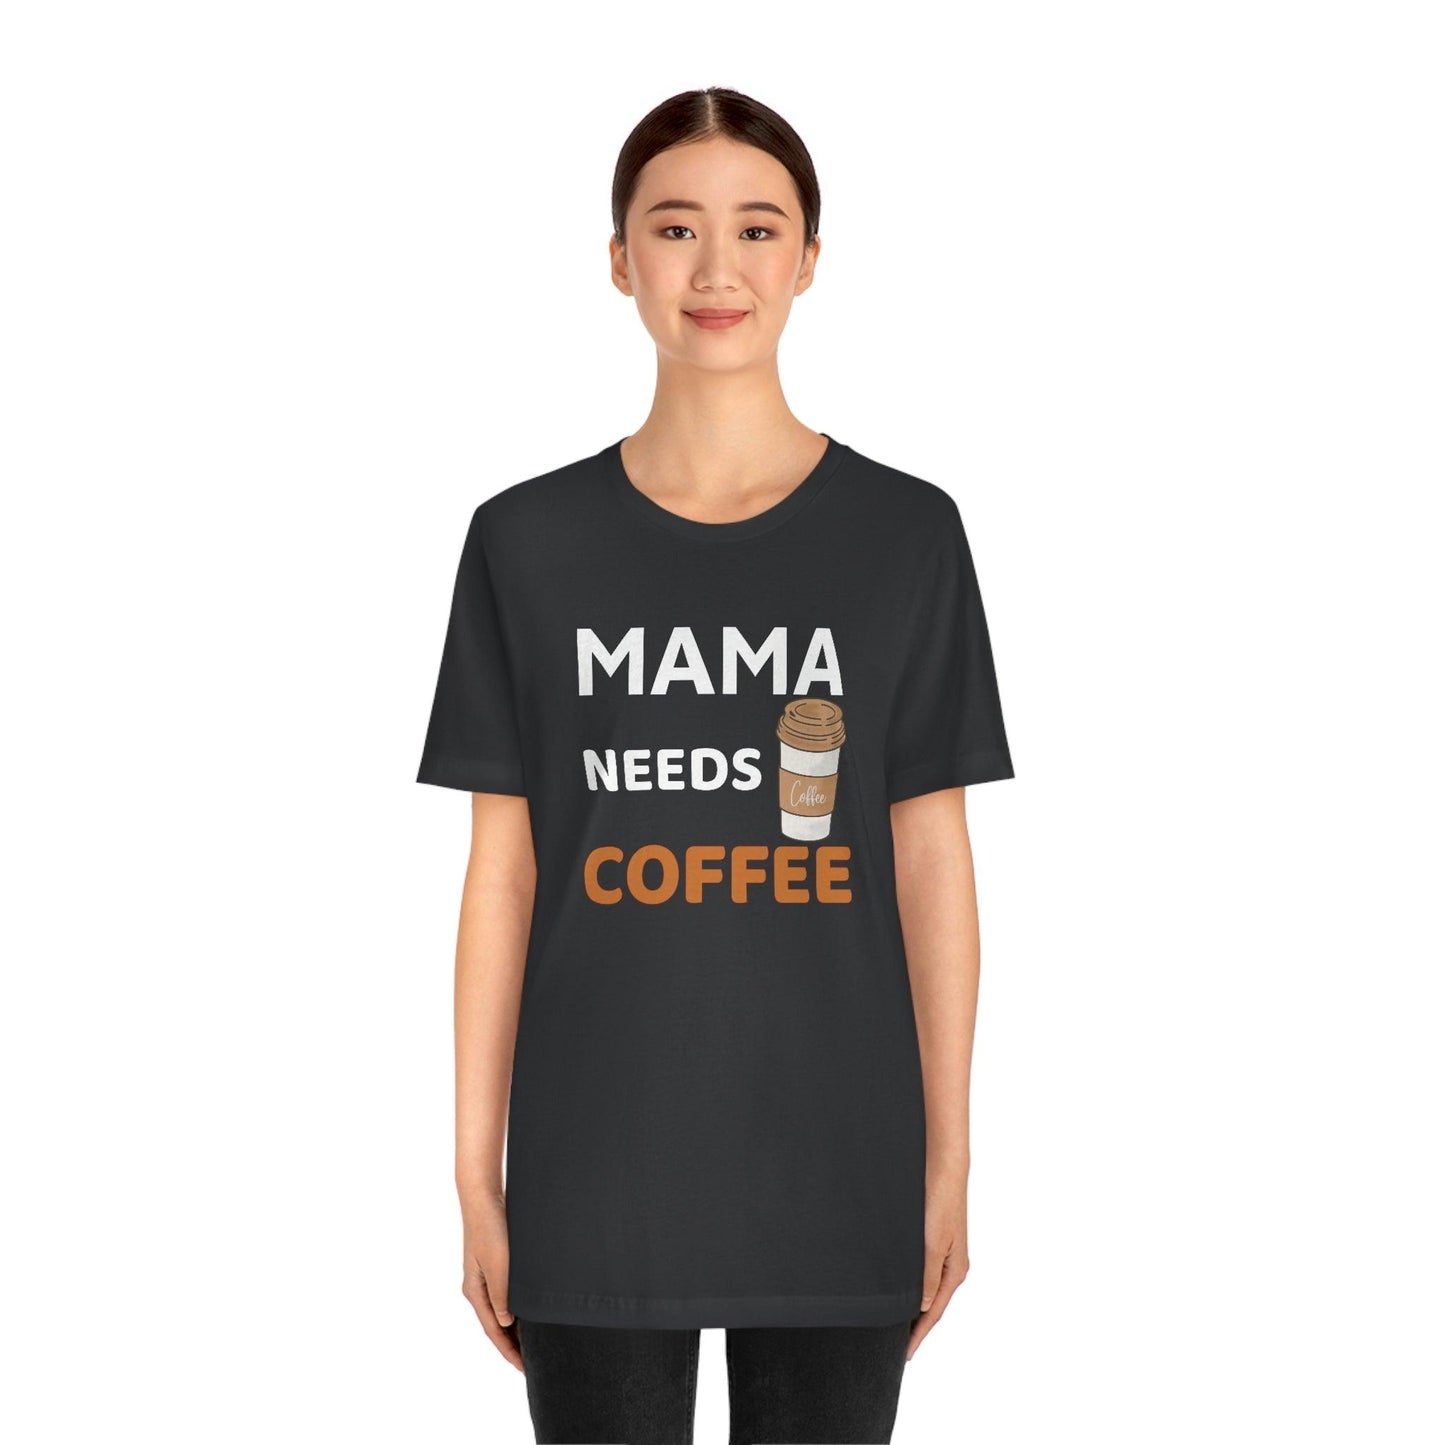 Mama Needs Coffee shirt - Coffee lovers shirt - funny coffee shirt - Giftsmojo